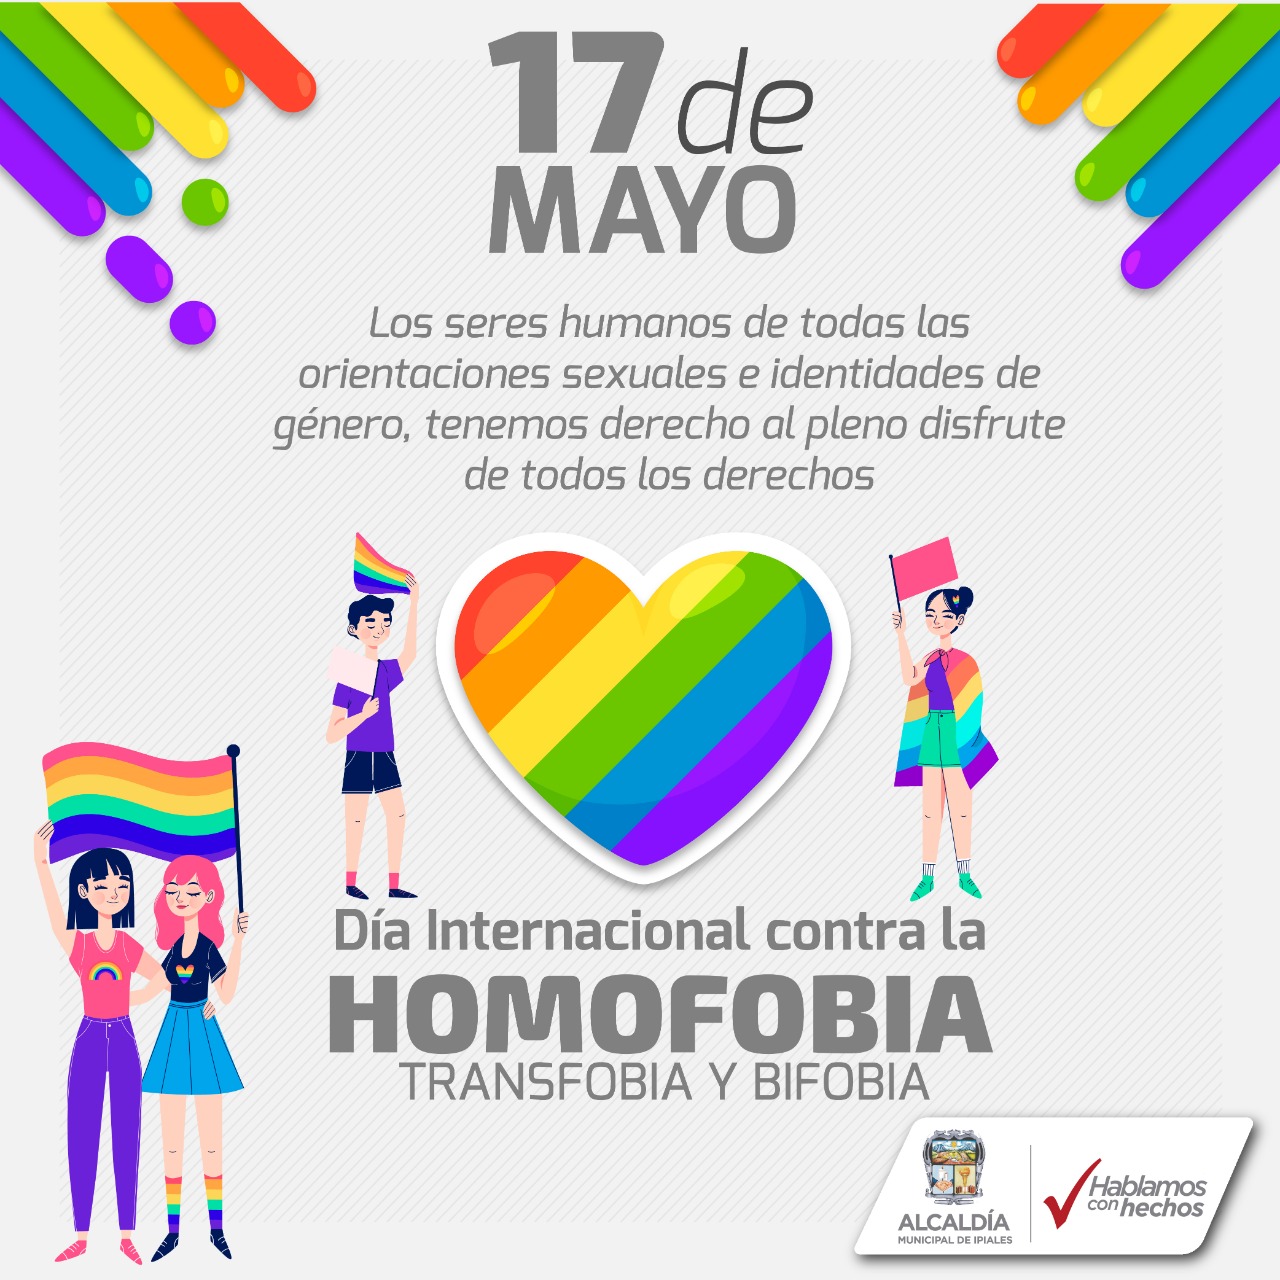   17 de Mayo - Día Internacional contra la Homofobia, Transfobia y Bifobia / May 17 - International Day Against Homophobia, Transphobia and Biphobia 